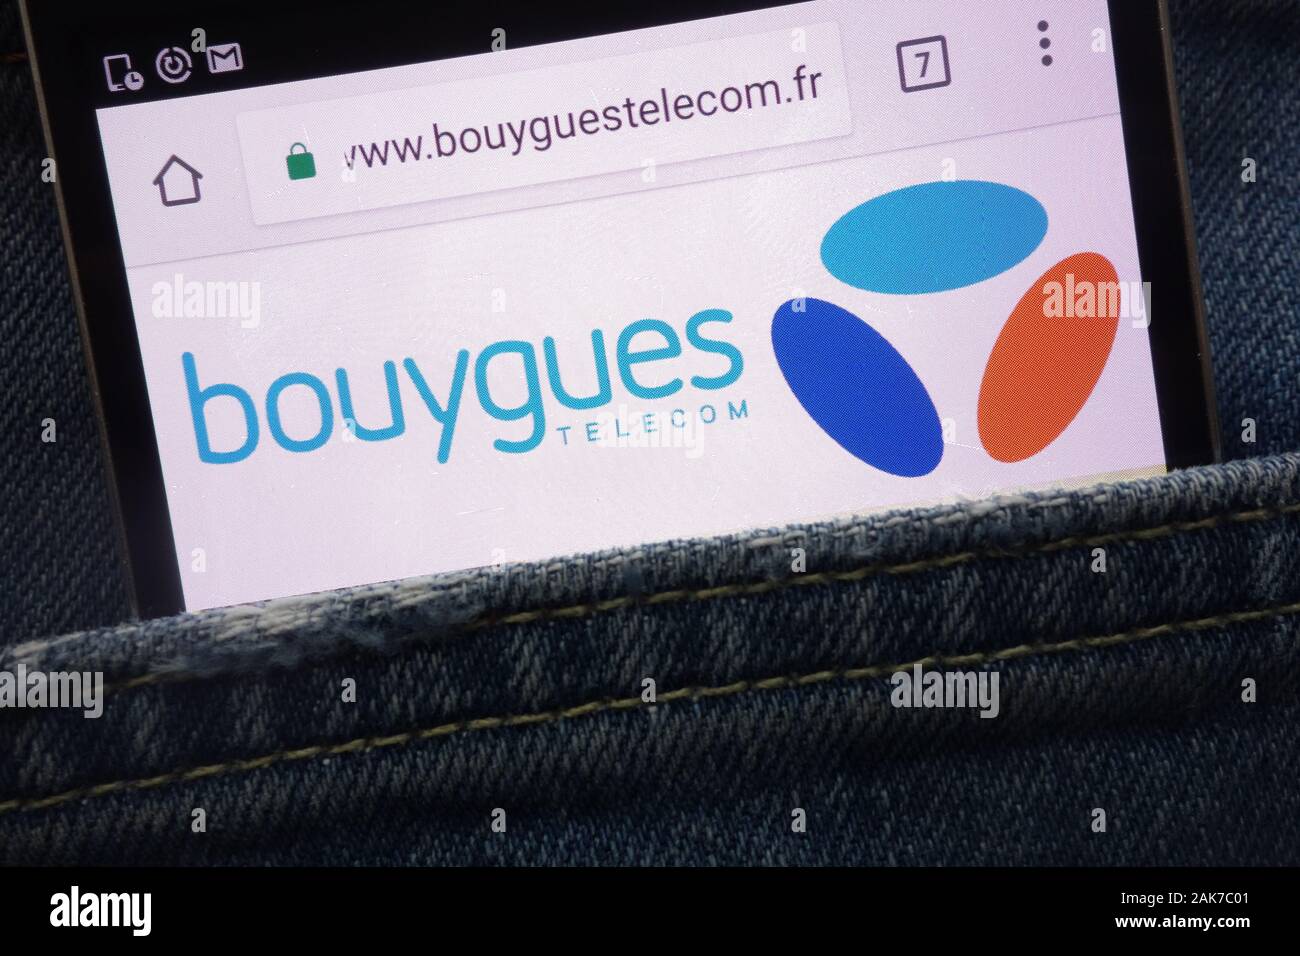 Bouygues Telecom website displayed on smartphone hidden in jeans pocket Stock Photo